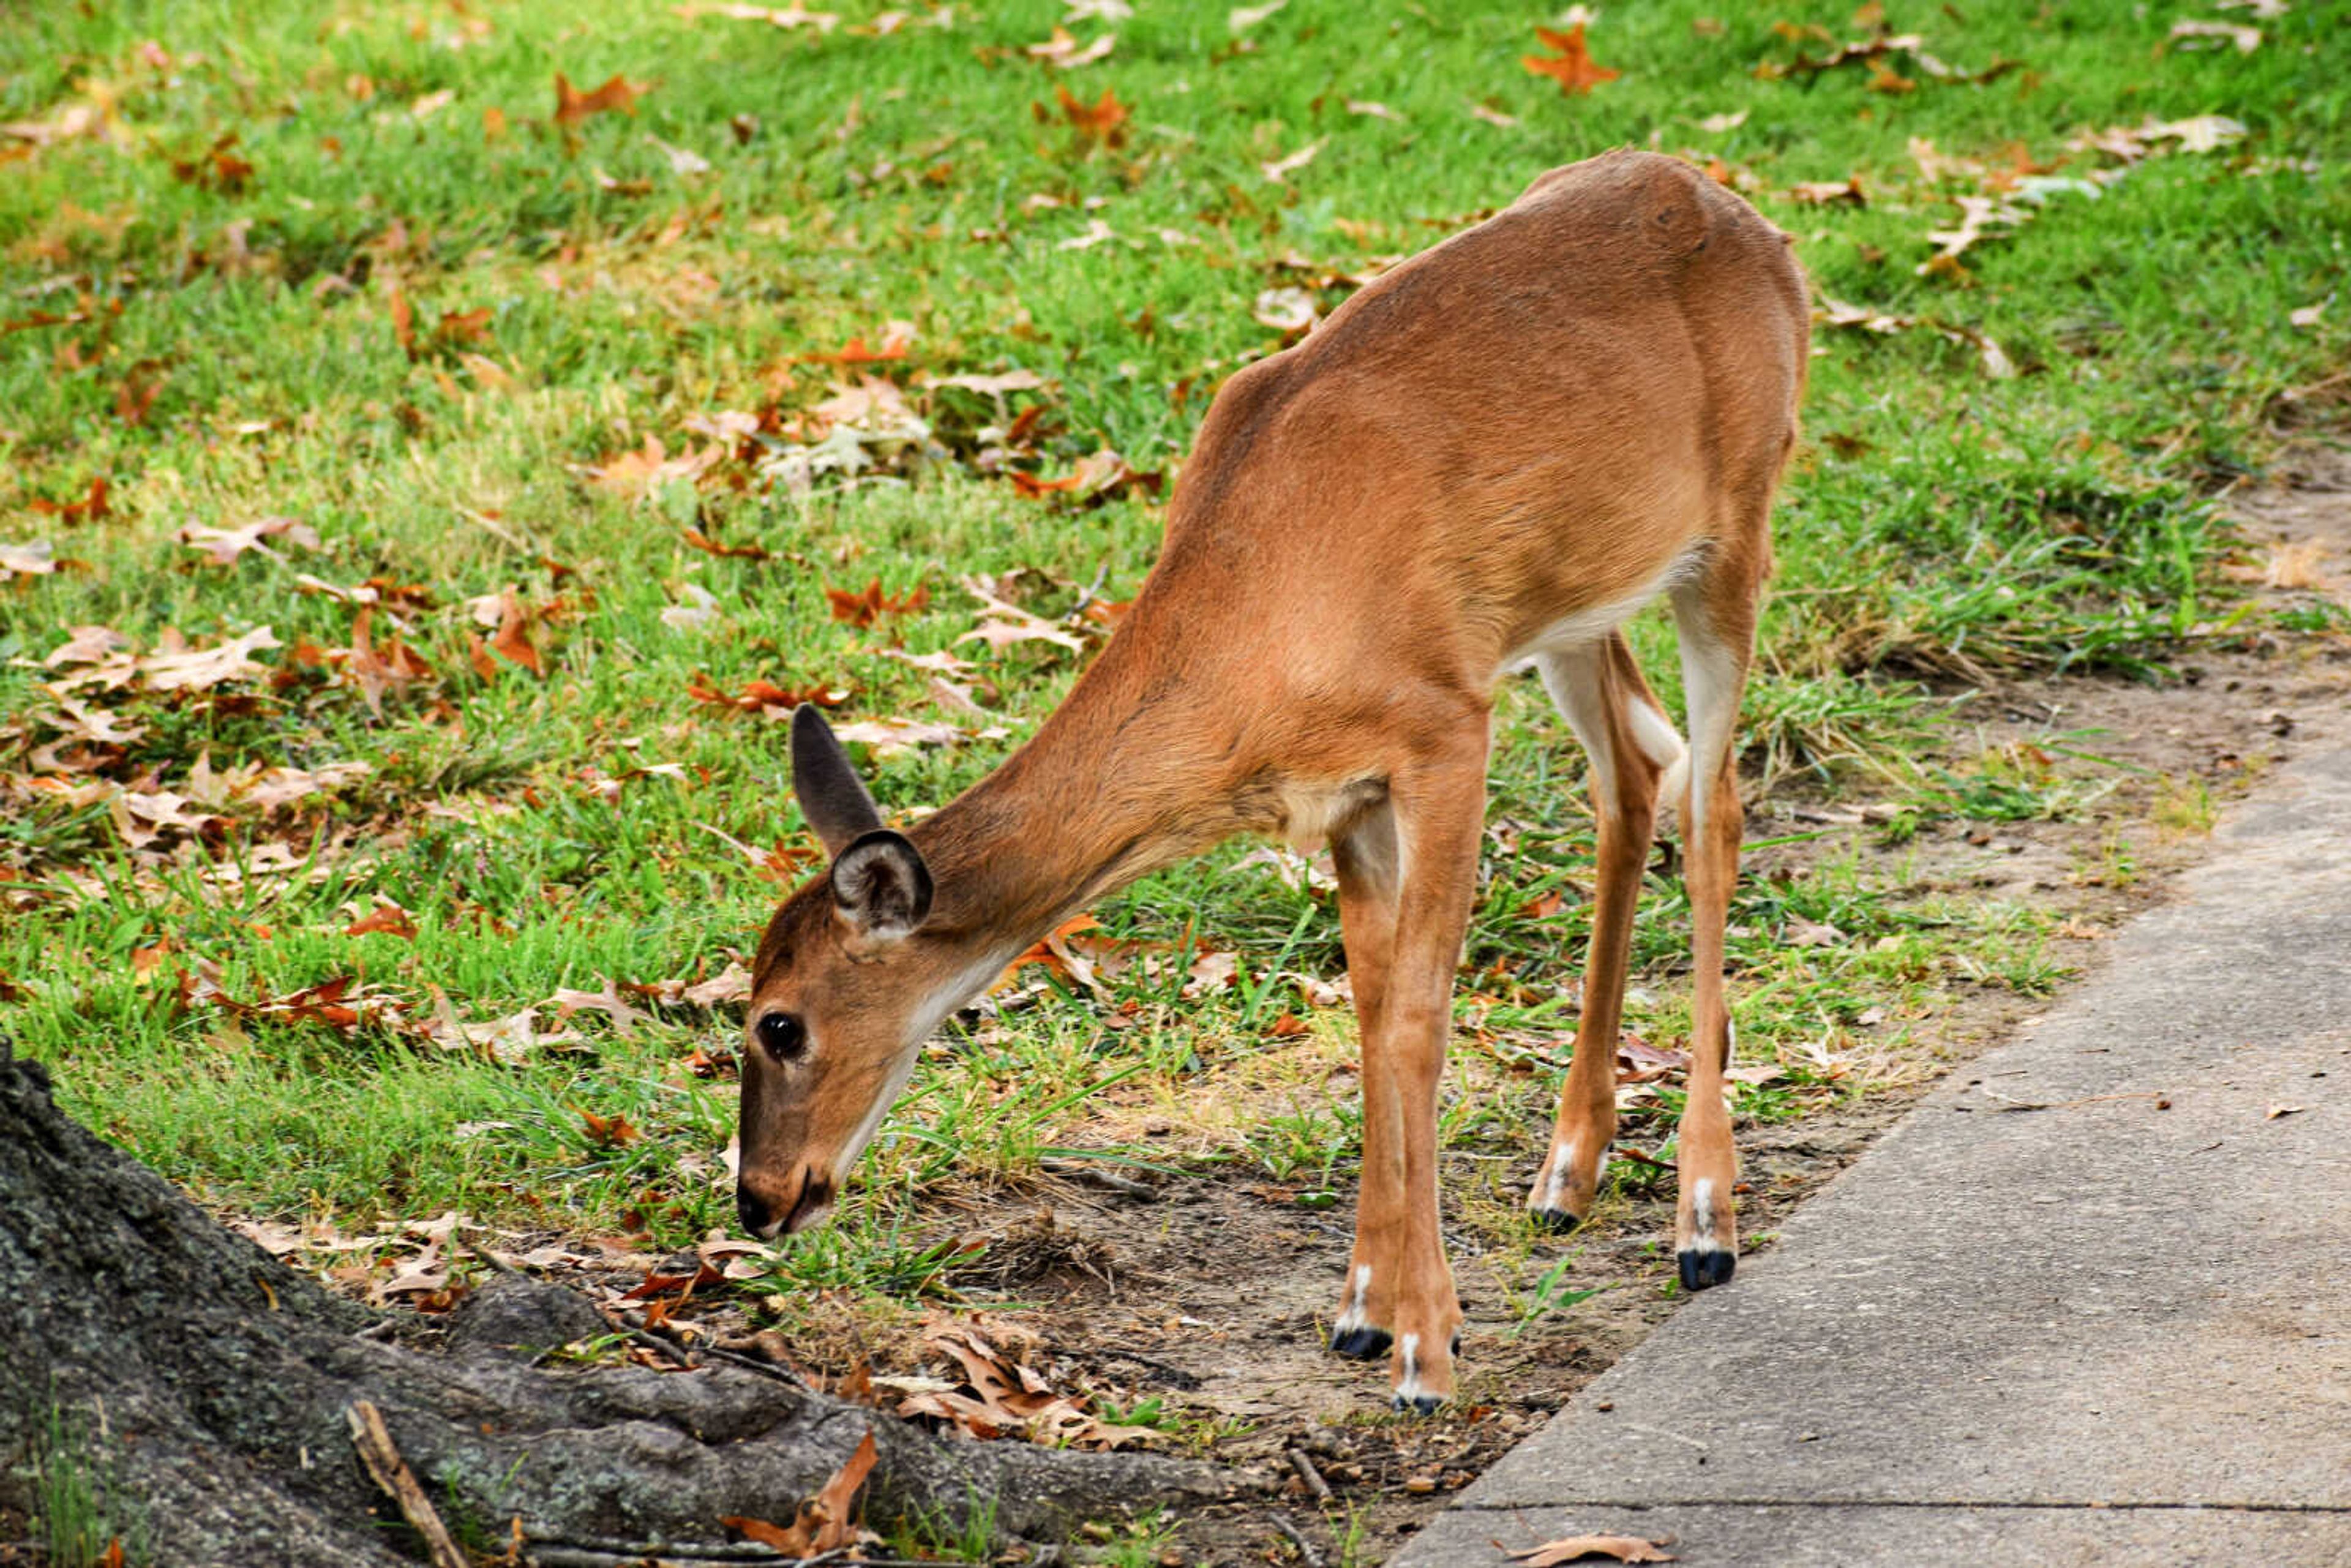 A deer on campus near Parker field.